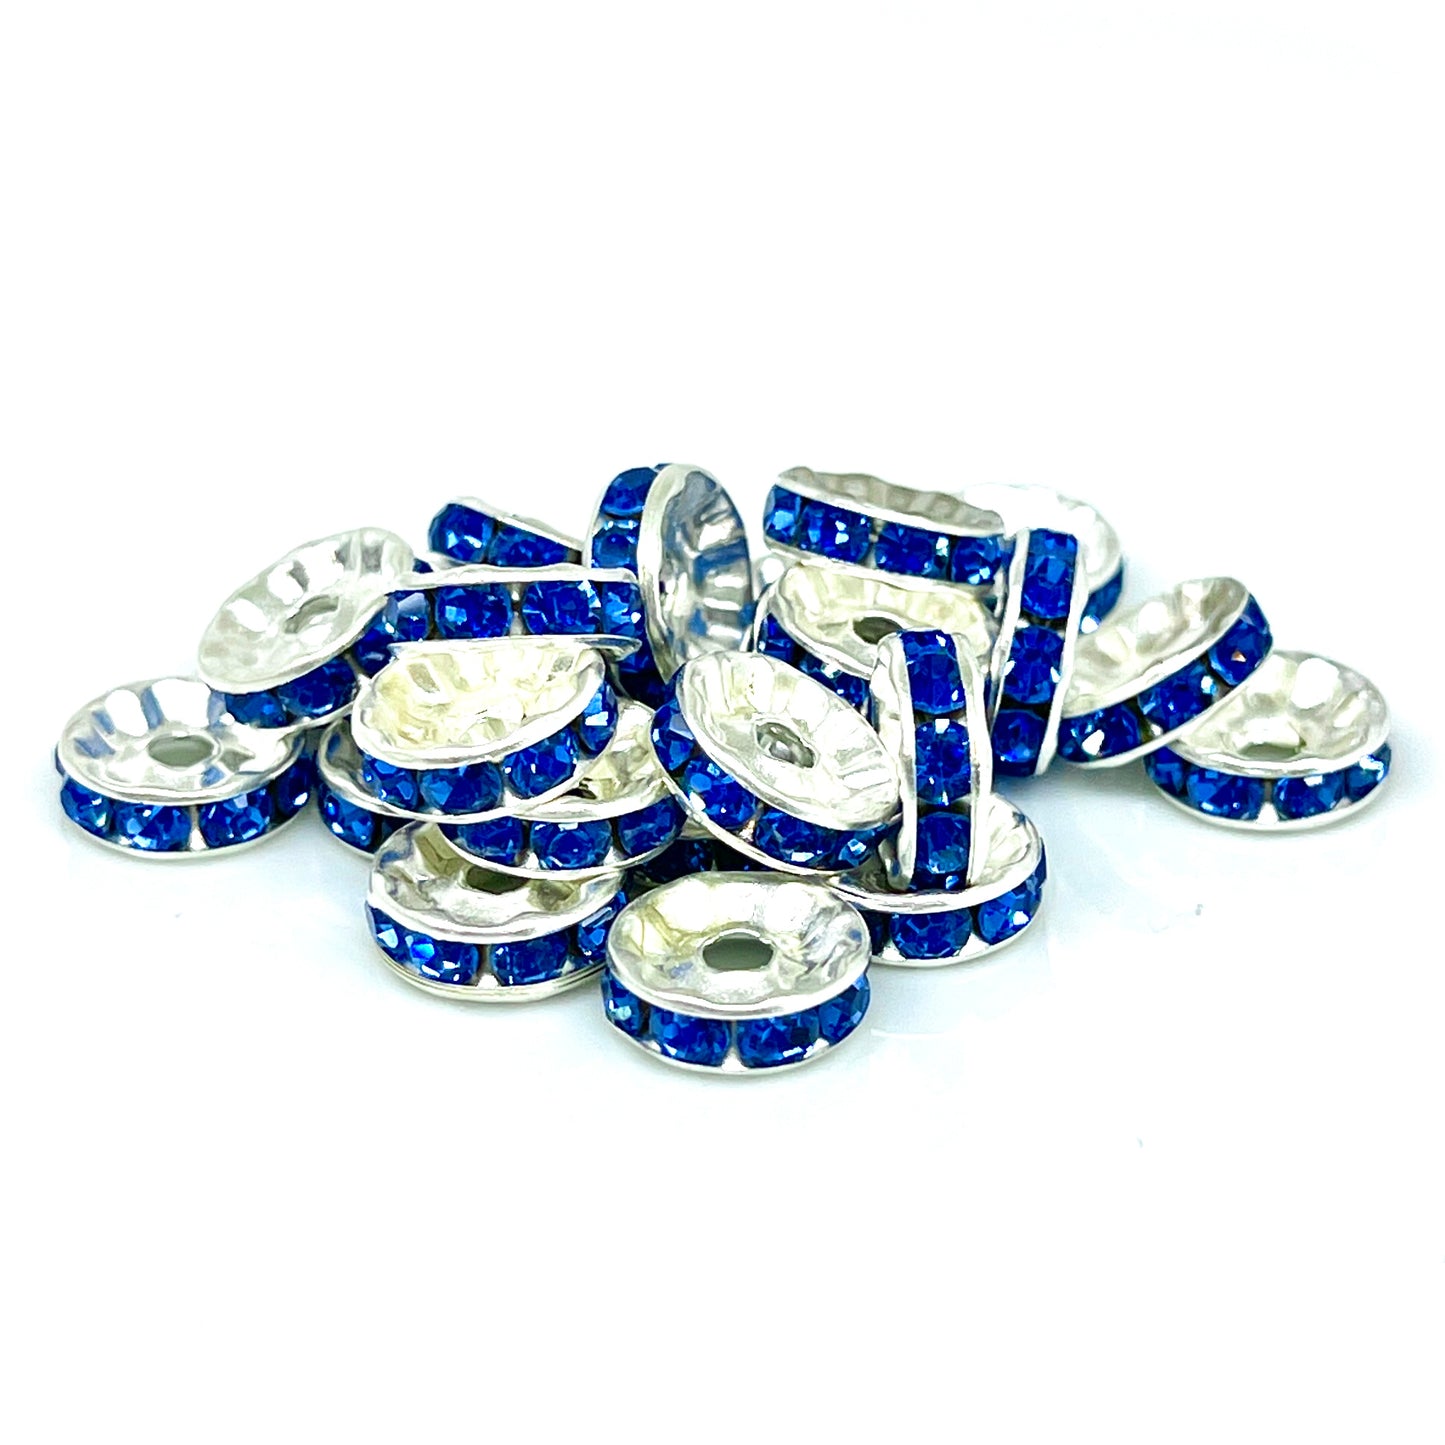 Royal Blue Rhinestone Spacer Beads - 10mm